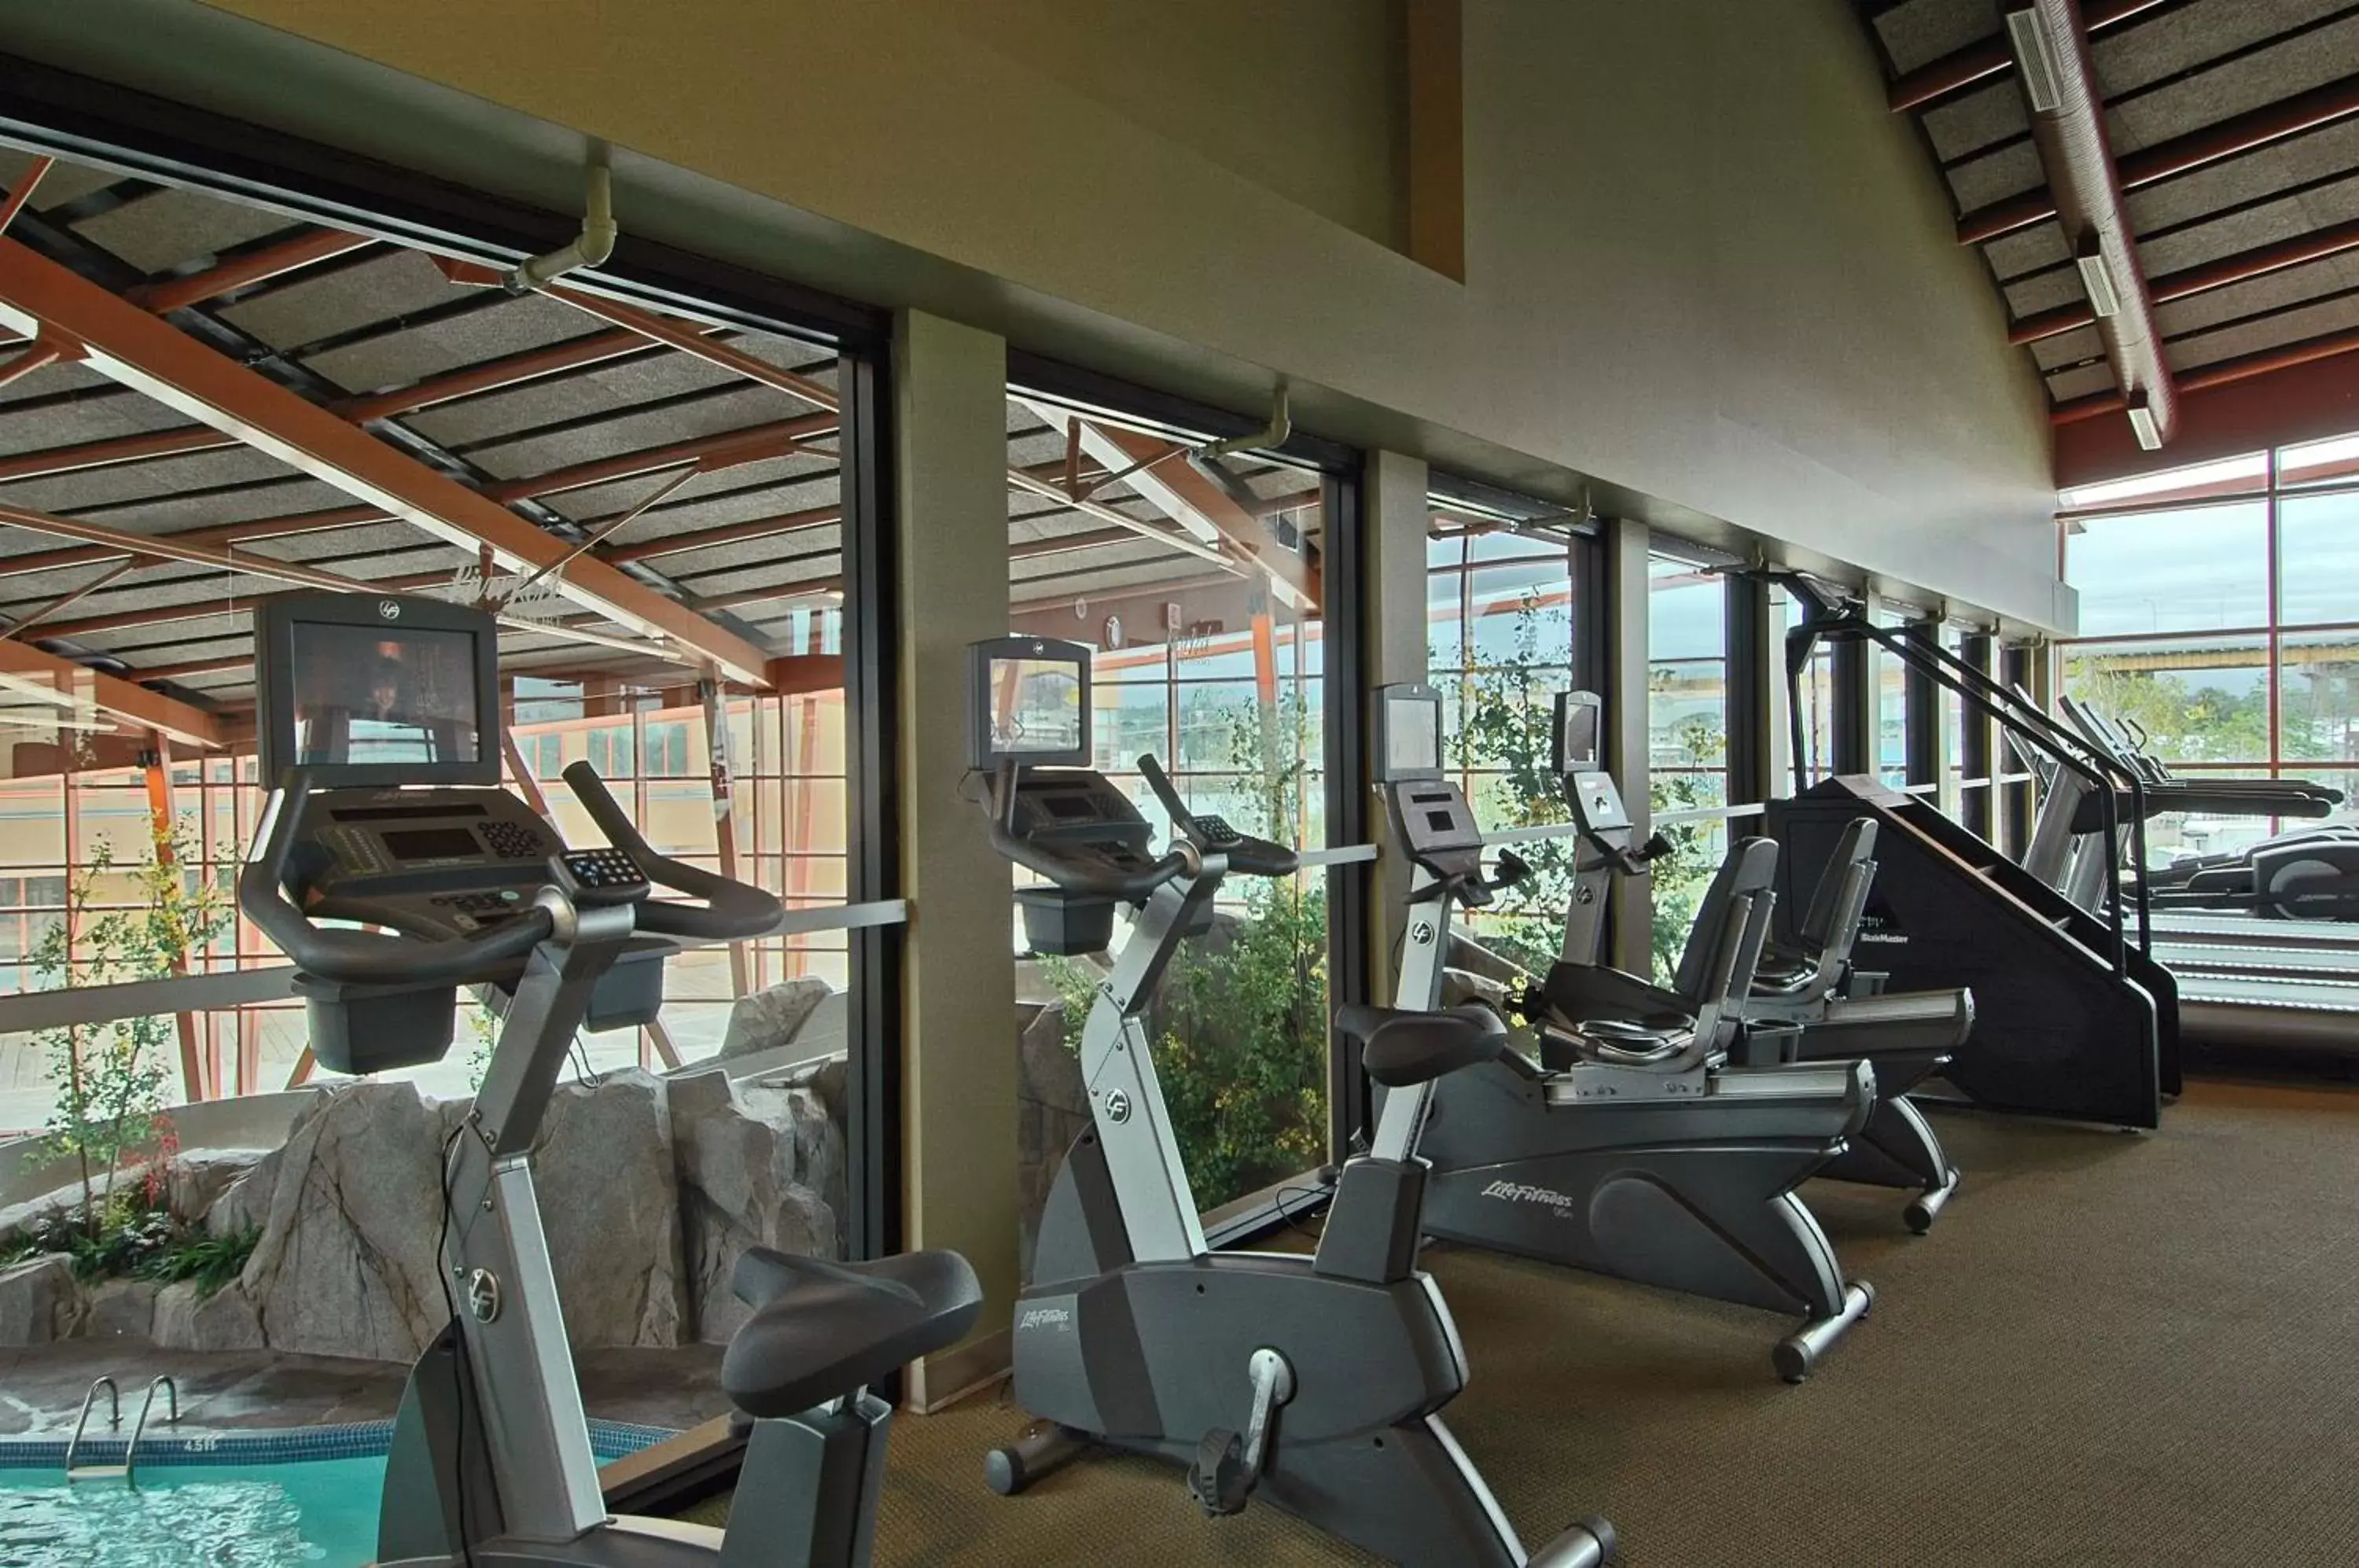 Fitness centre/facilities, Fitness Center/Facilities in River Rock Casino Hotel